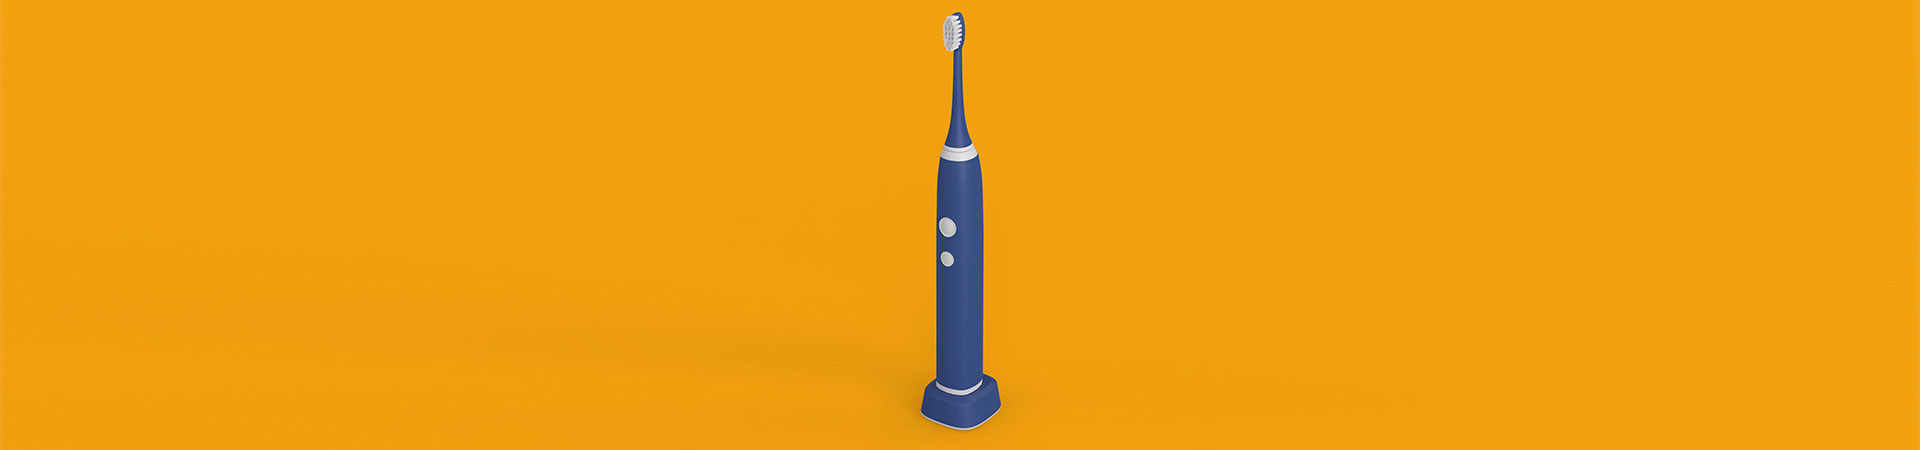 Useful Tools to Help Keep your Teeth Clean